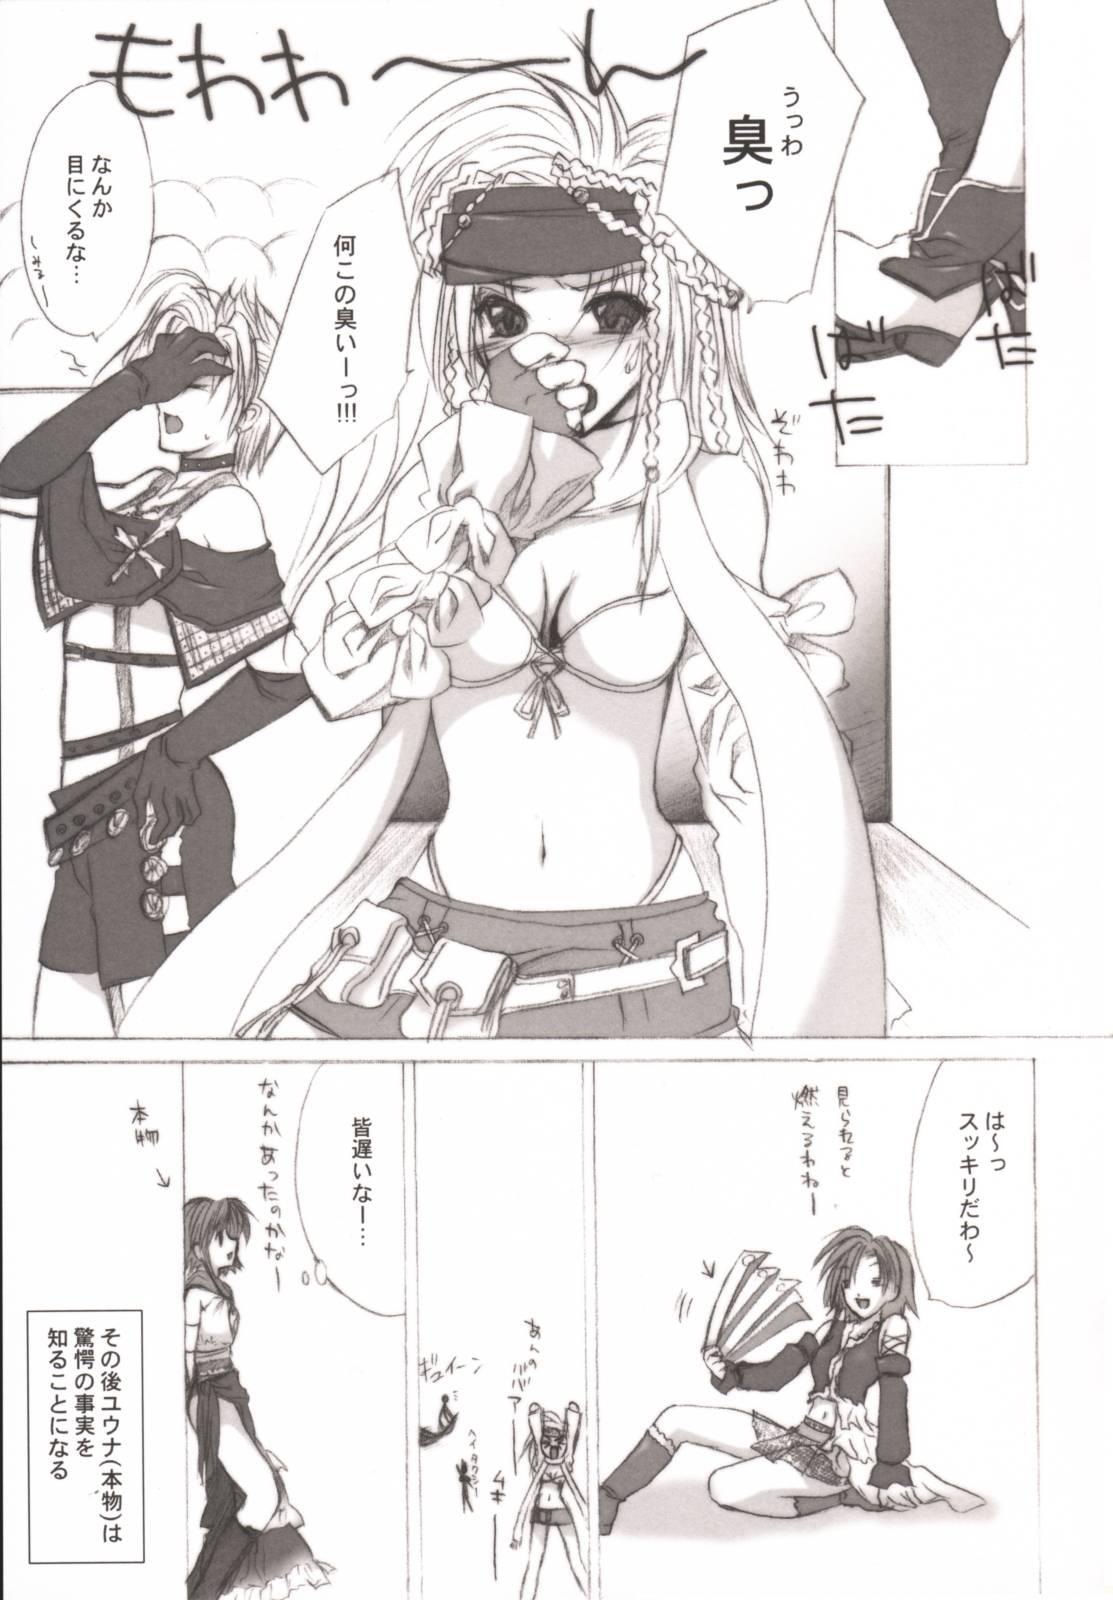 19yo RPG - Rise Passion Girl - Final fantasy x 2 Final fantasy ix Star ocean 3 Skinny - Page 12